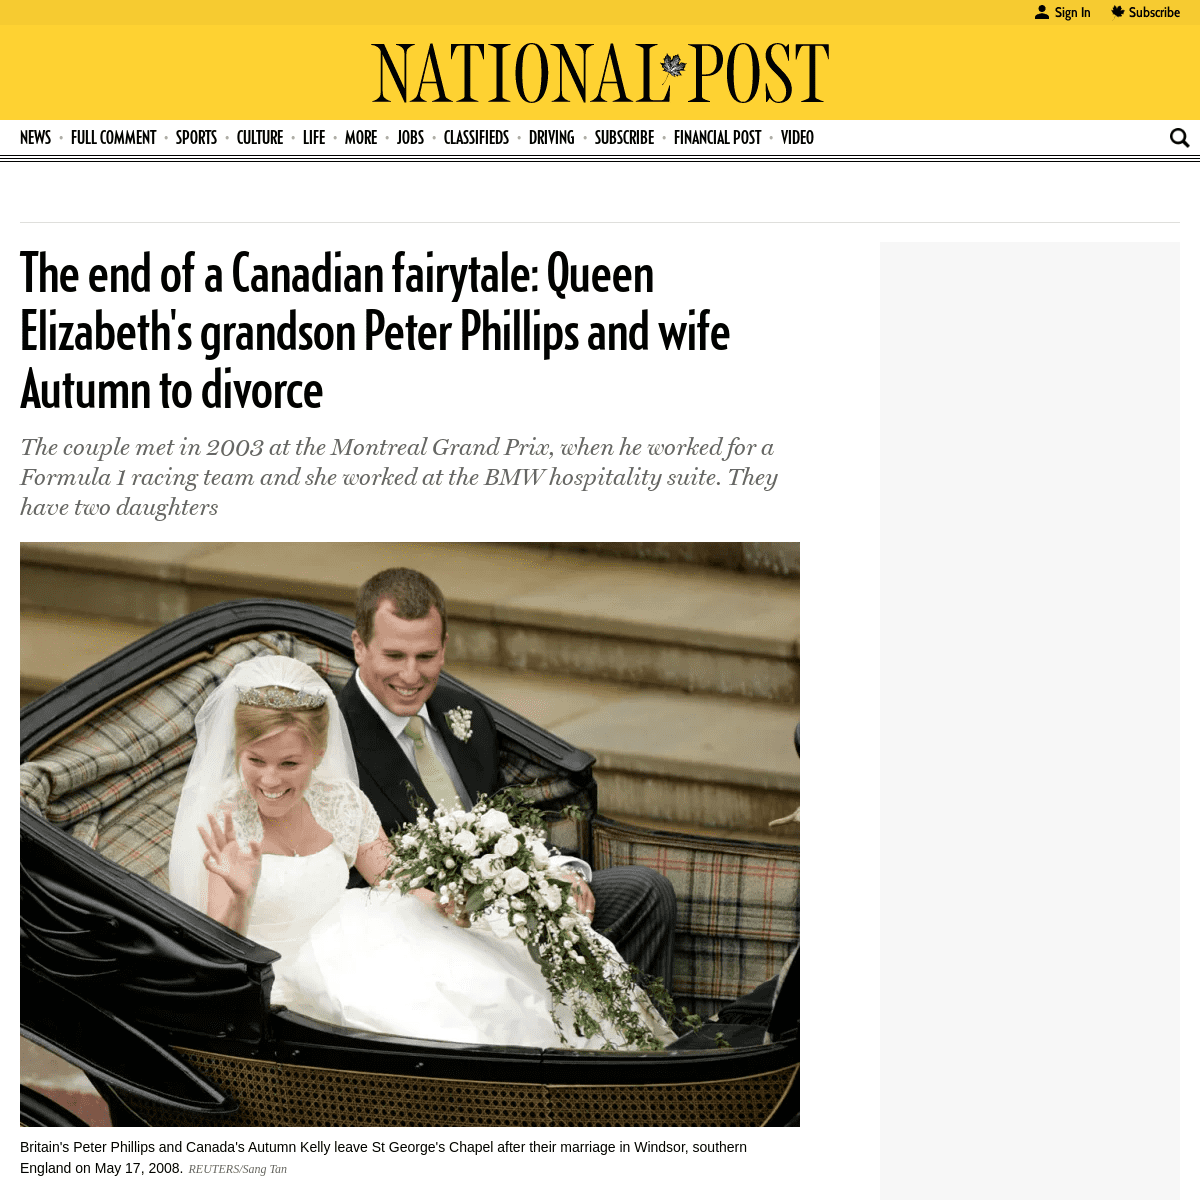 A complete backup of nationalpost.com/news/world/queens-grandson-peter-phillips-autumn-divorce